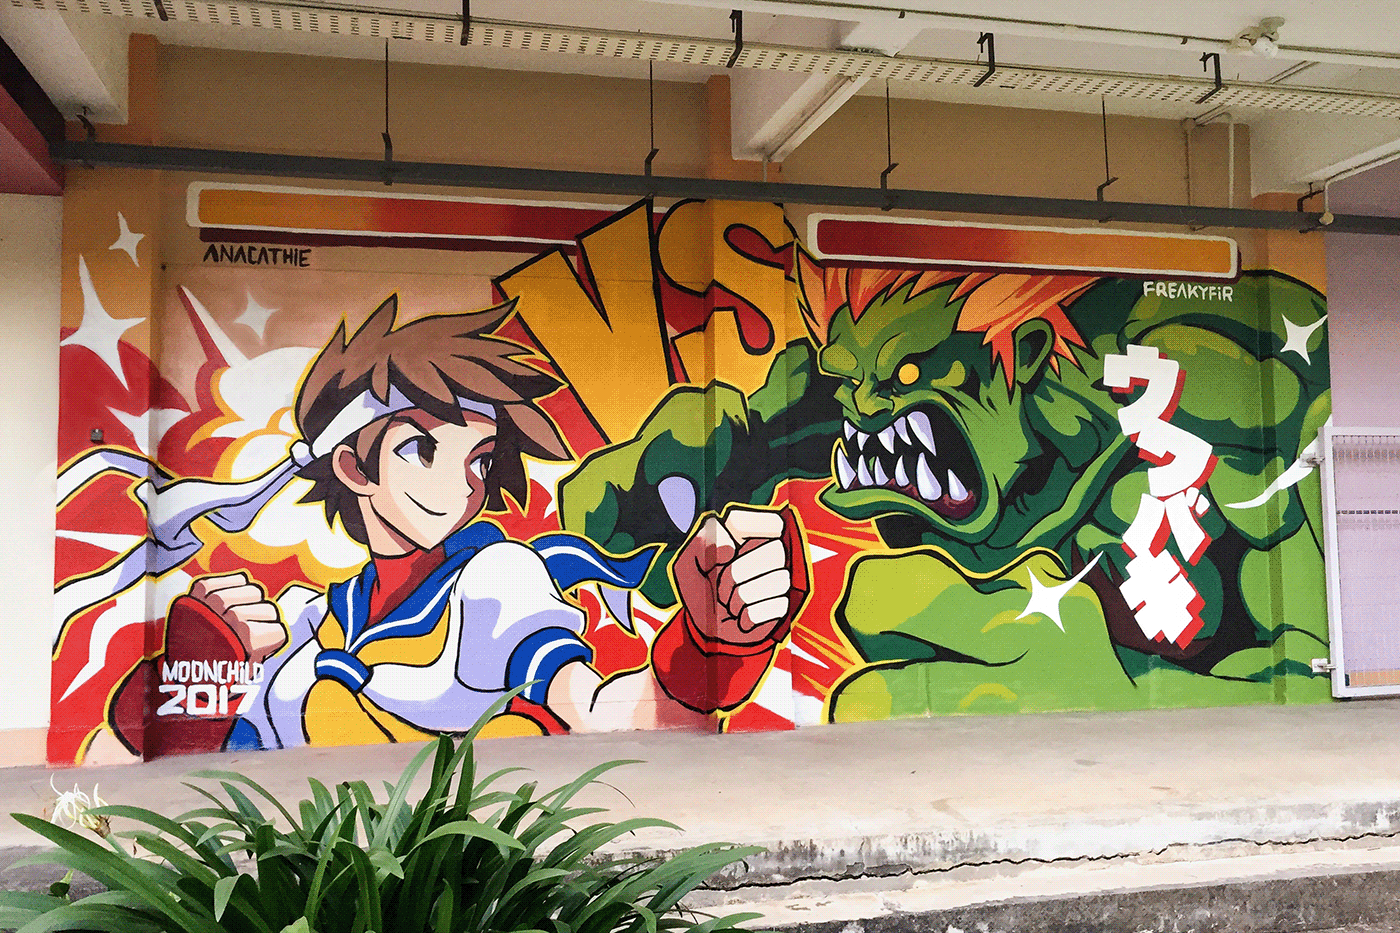 singapore graffiti anime graffiti Mural Street Art  STREET FIGHTER urban art anacathie freakyfir studiomoonchild Graffiti